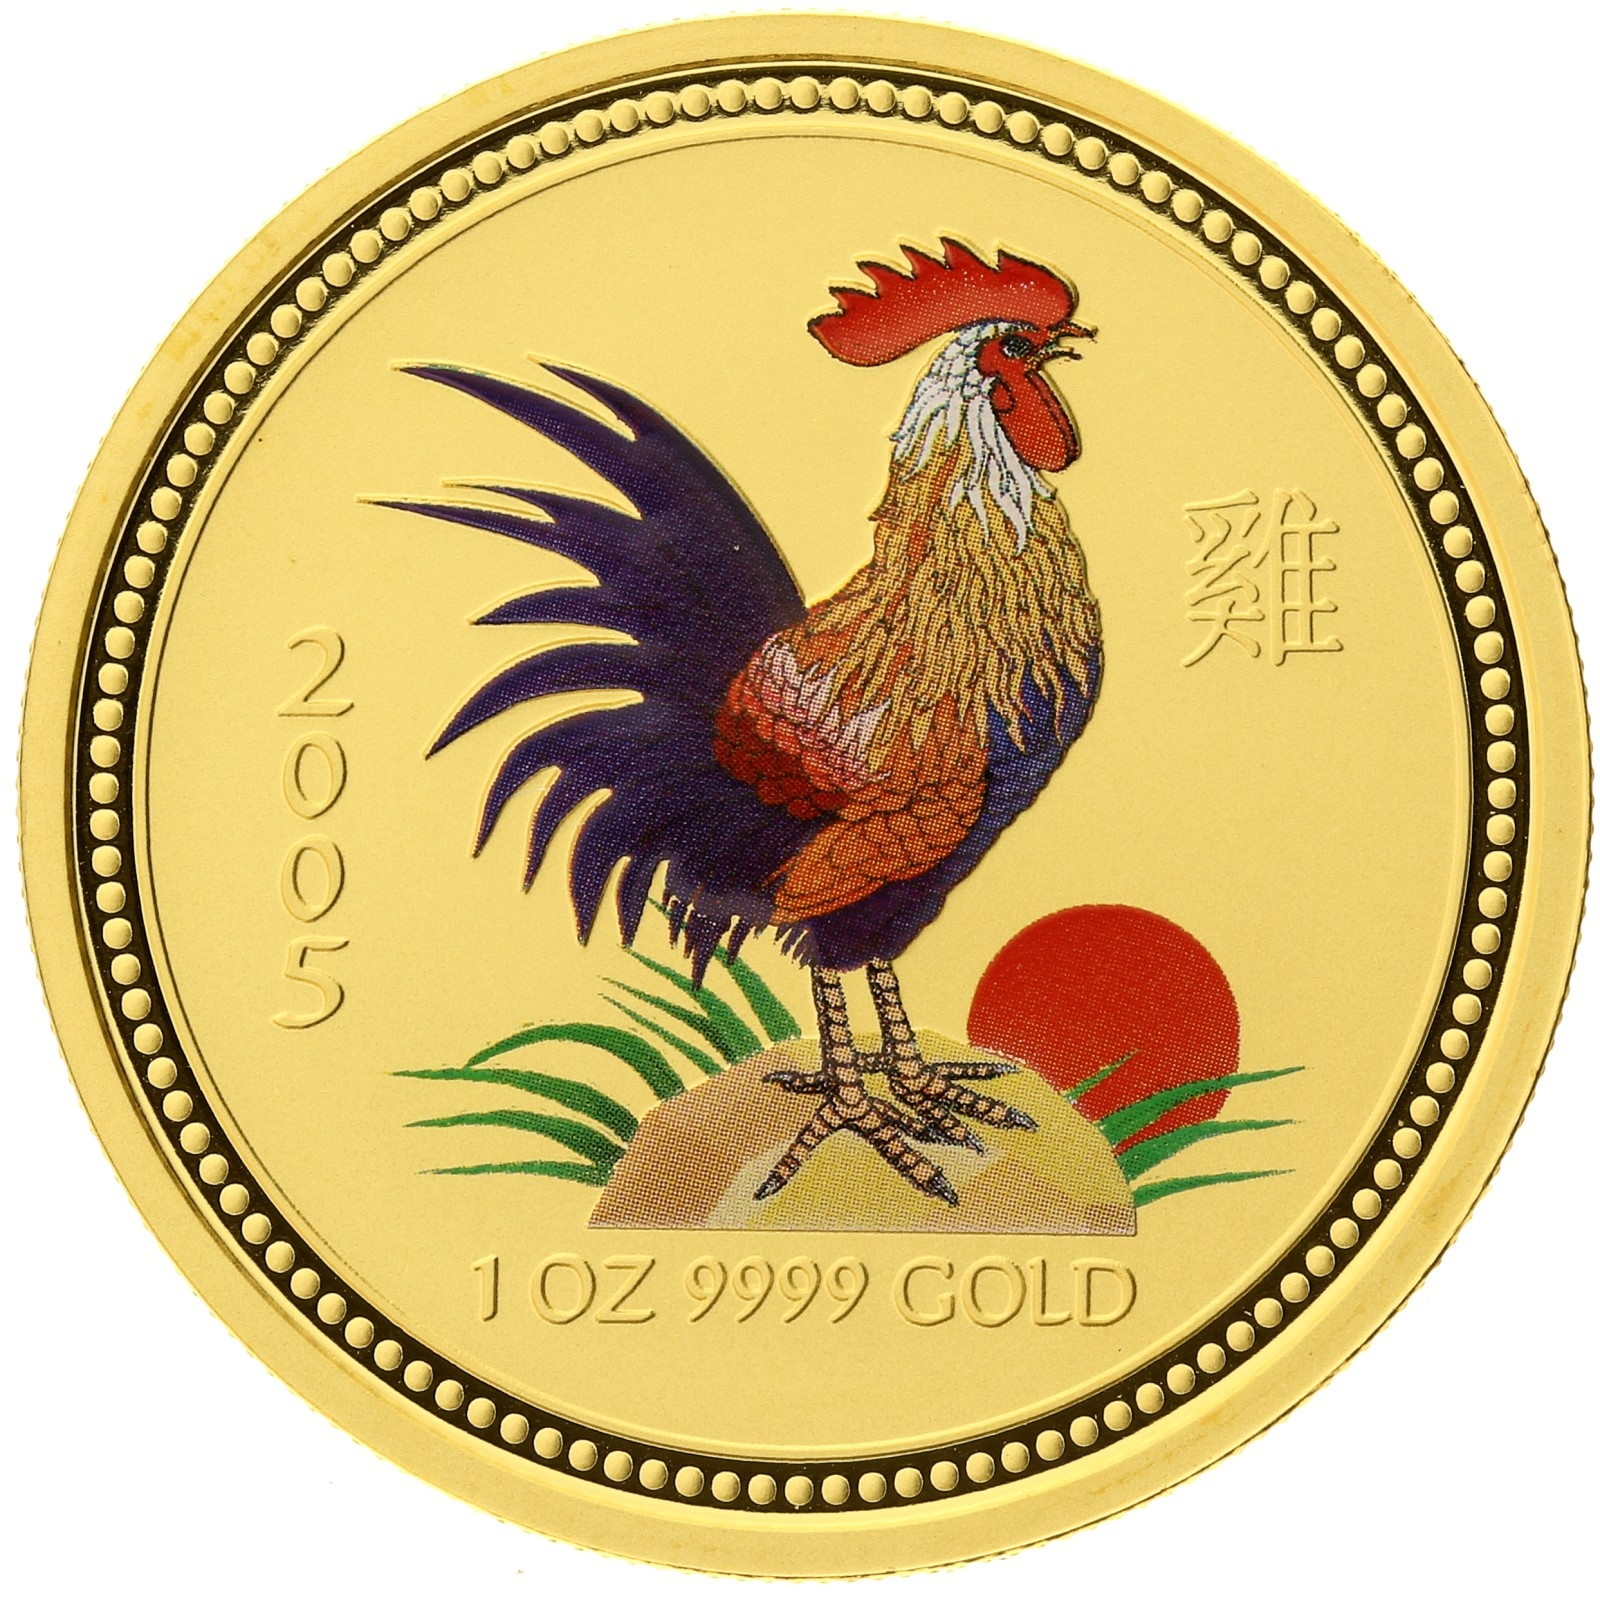 Australia - 100 dollars - 2005 - Year of the Rooster - Elizabeth II - 1oz gold